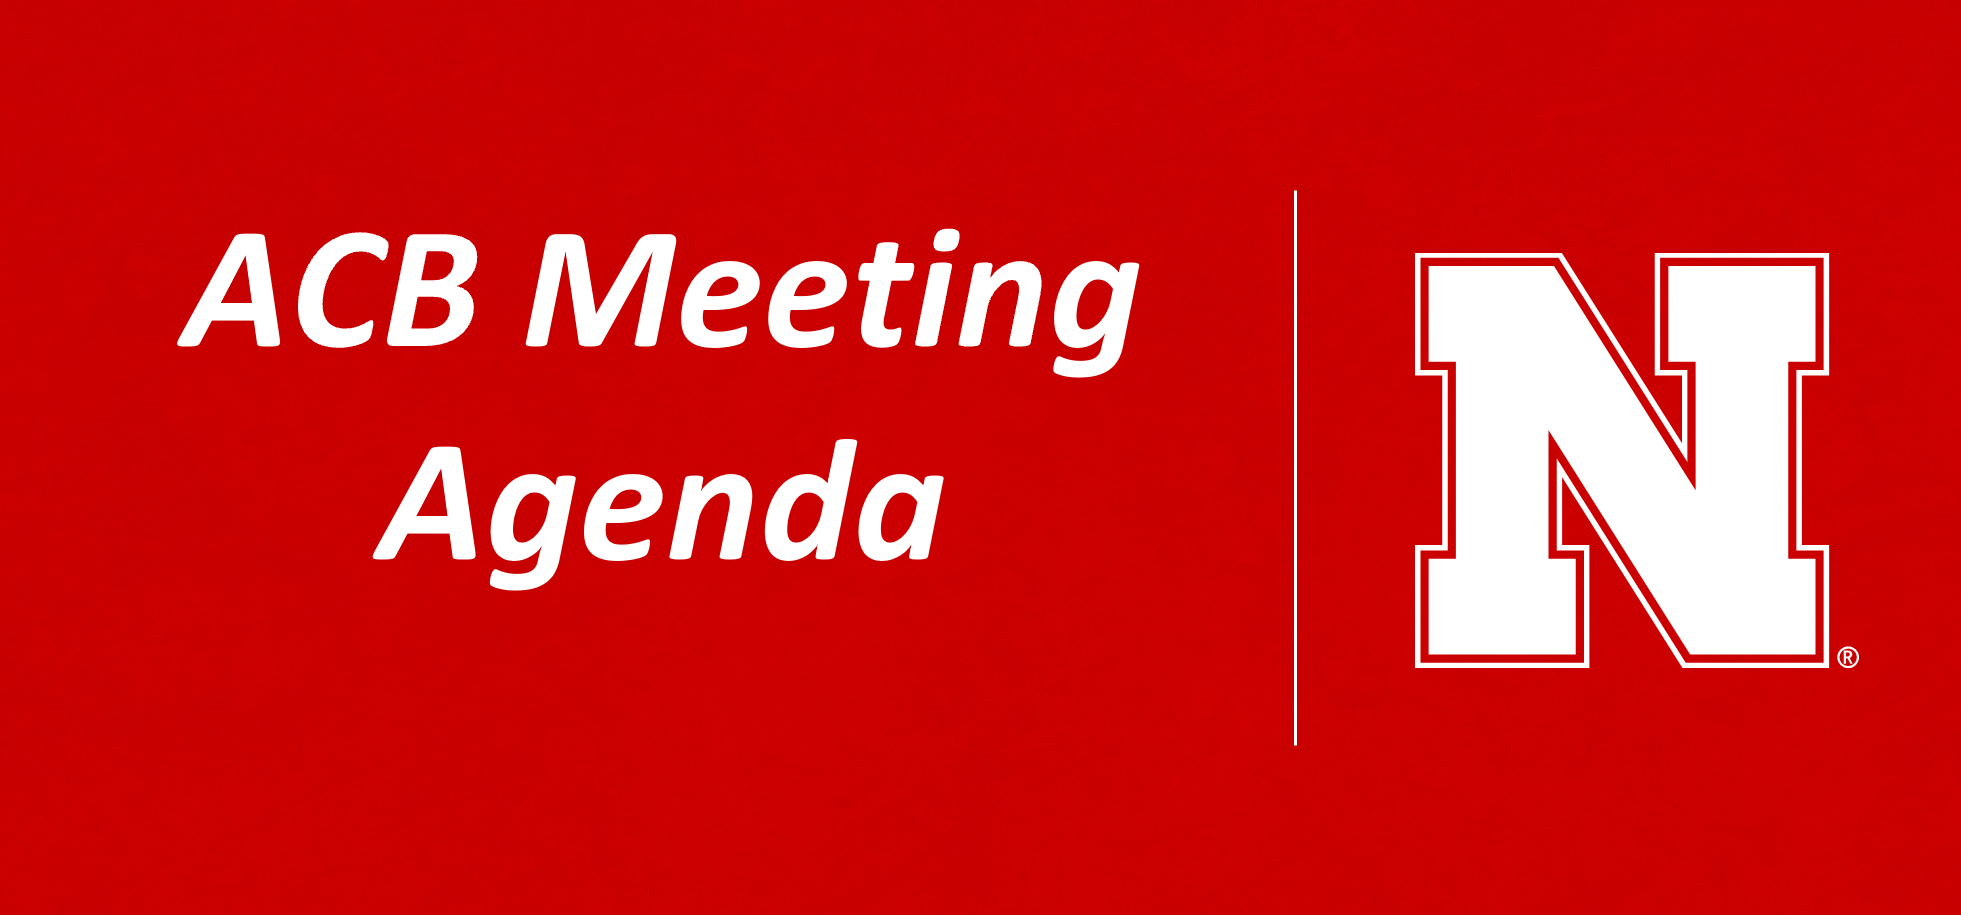 ACB Meeting Agenda Image